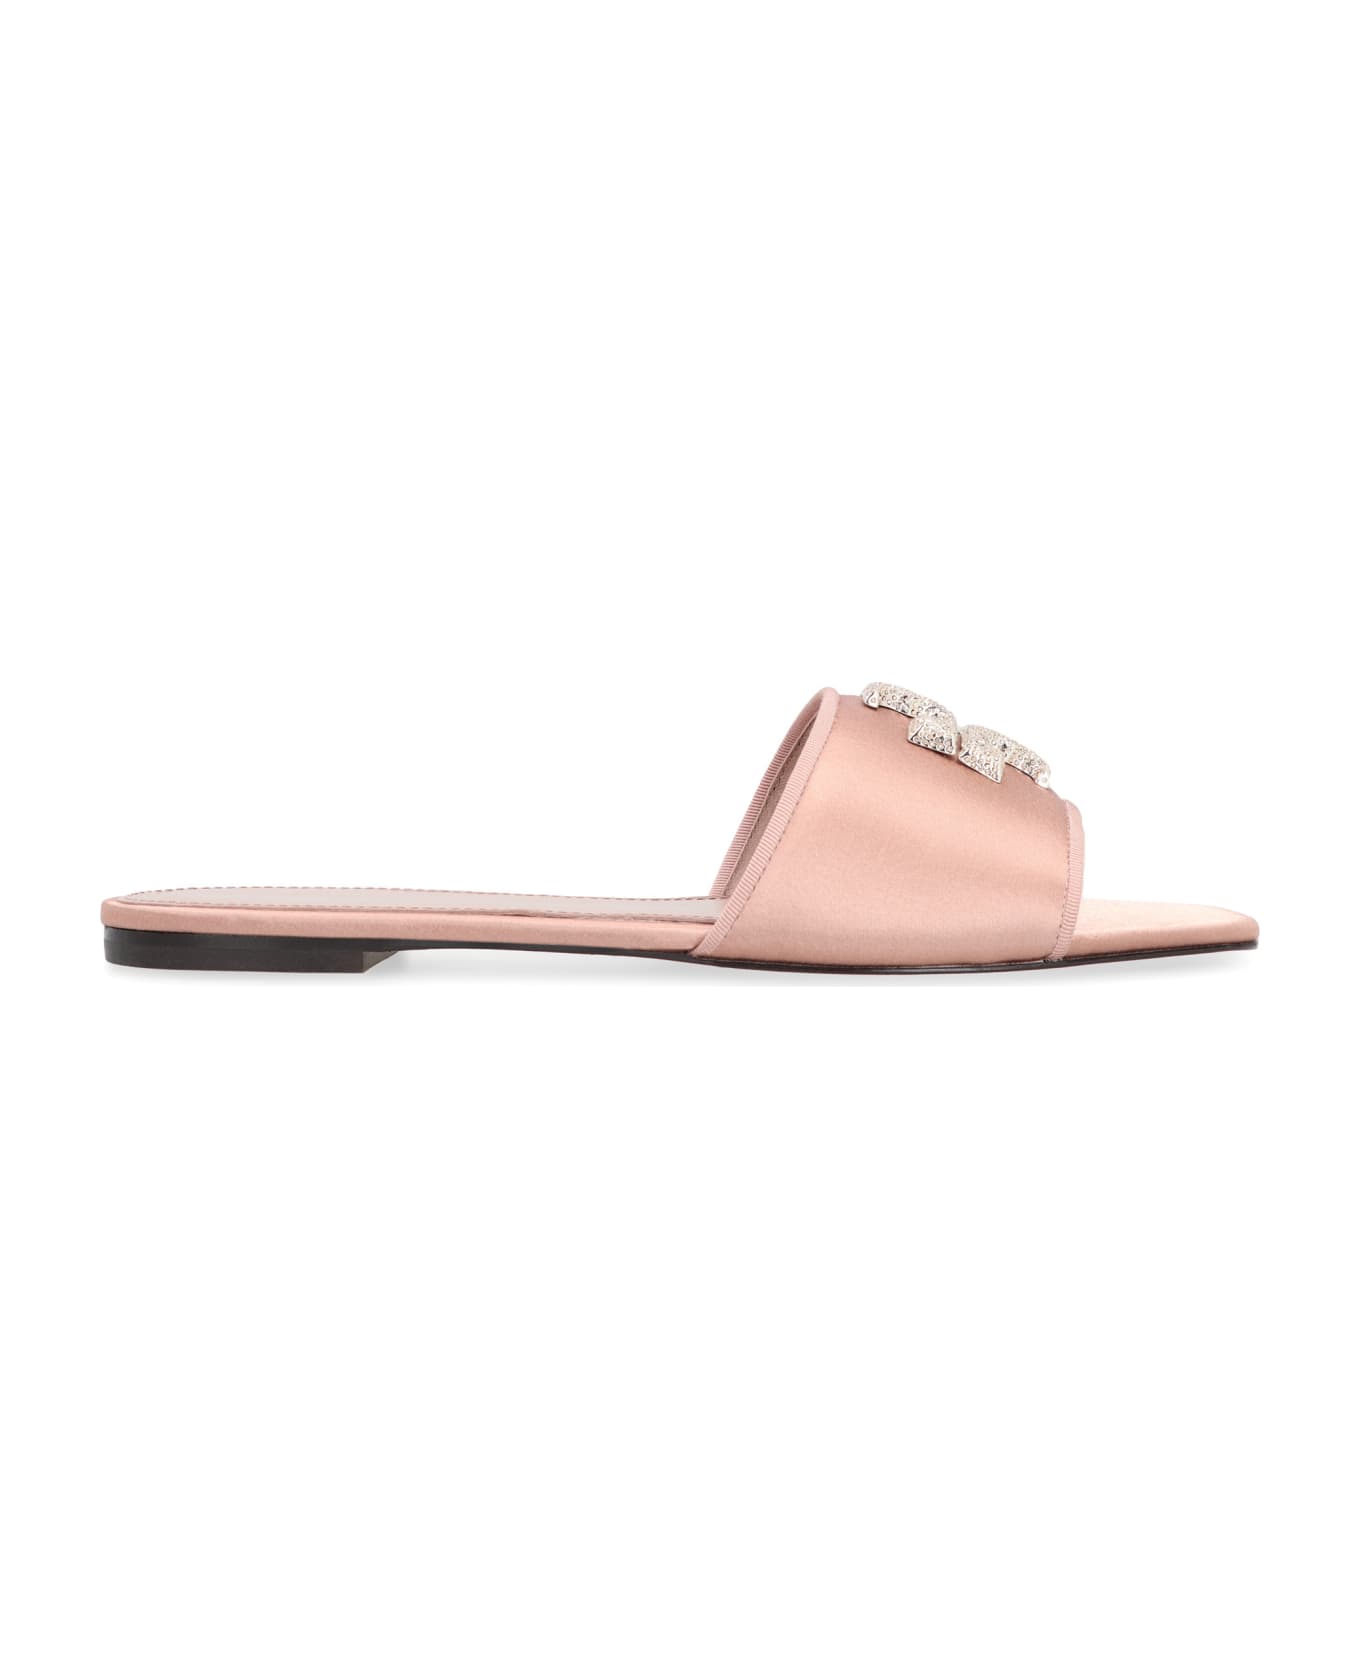 Tory Burch Eleanor Satin Sandals - Pink